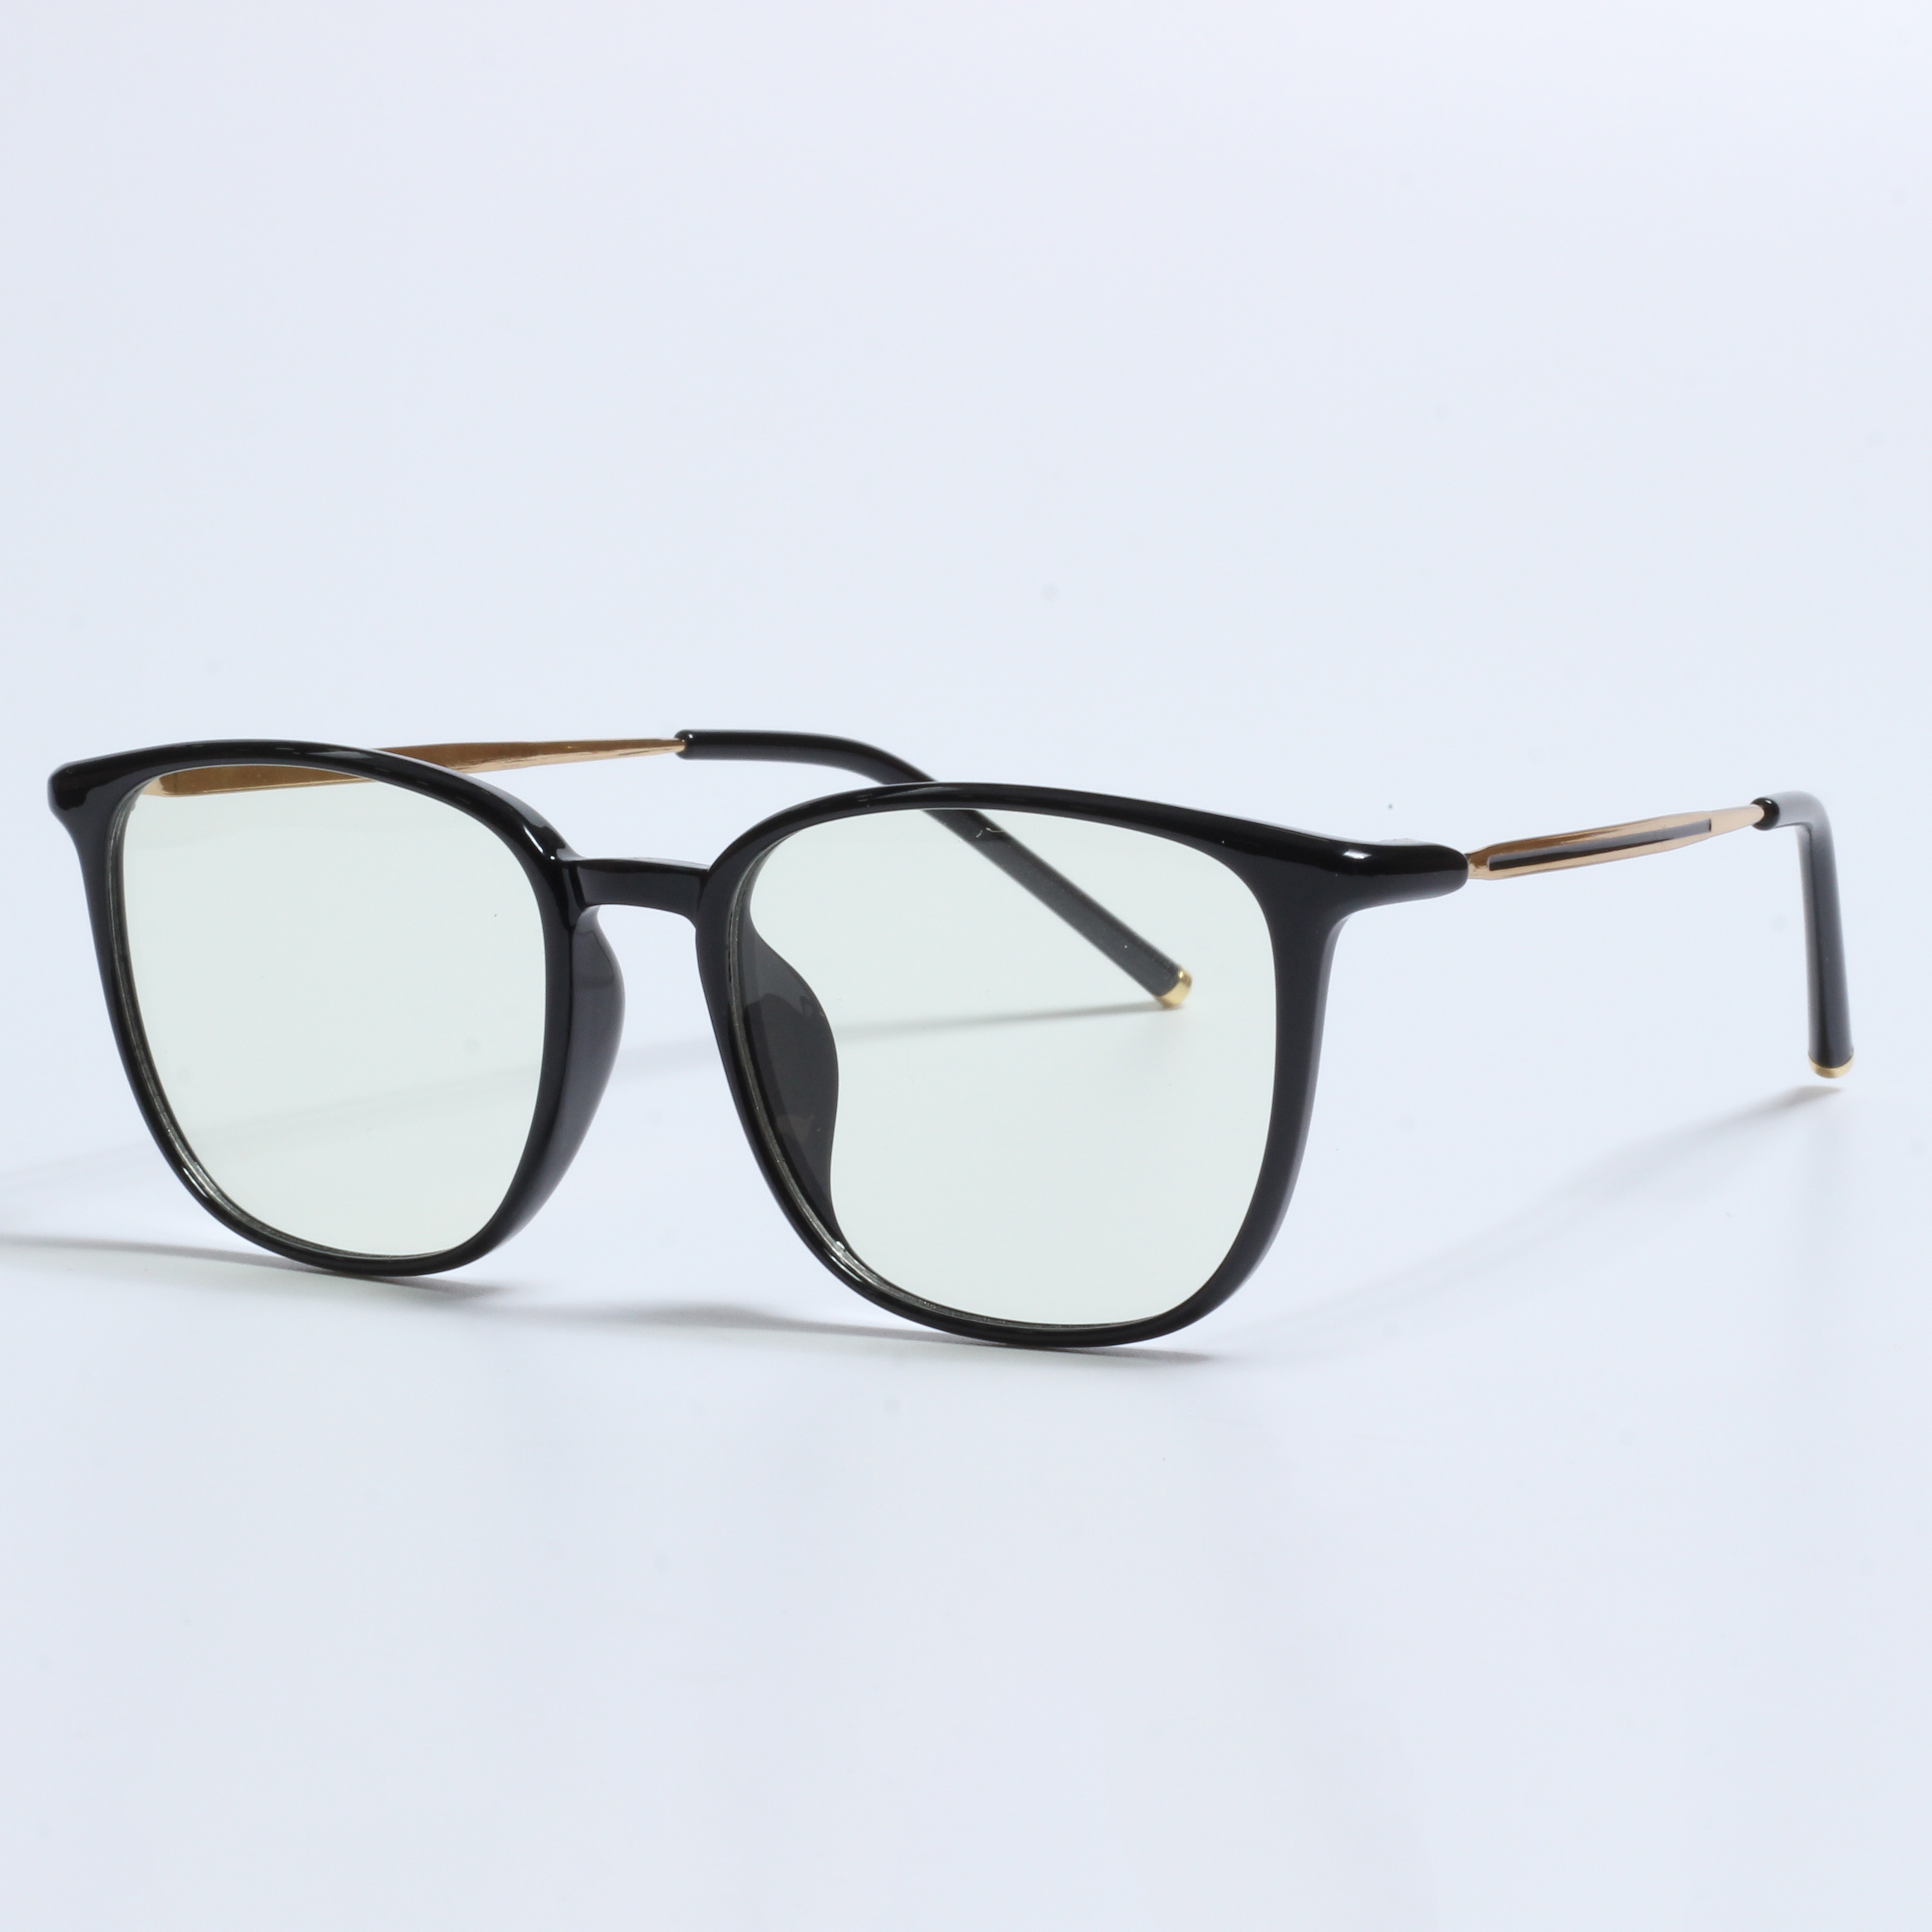 Bag-ong retro lunette anti lumiere designer nga reseta nga baso (2)